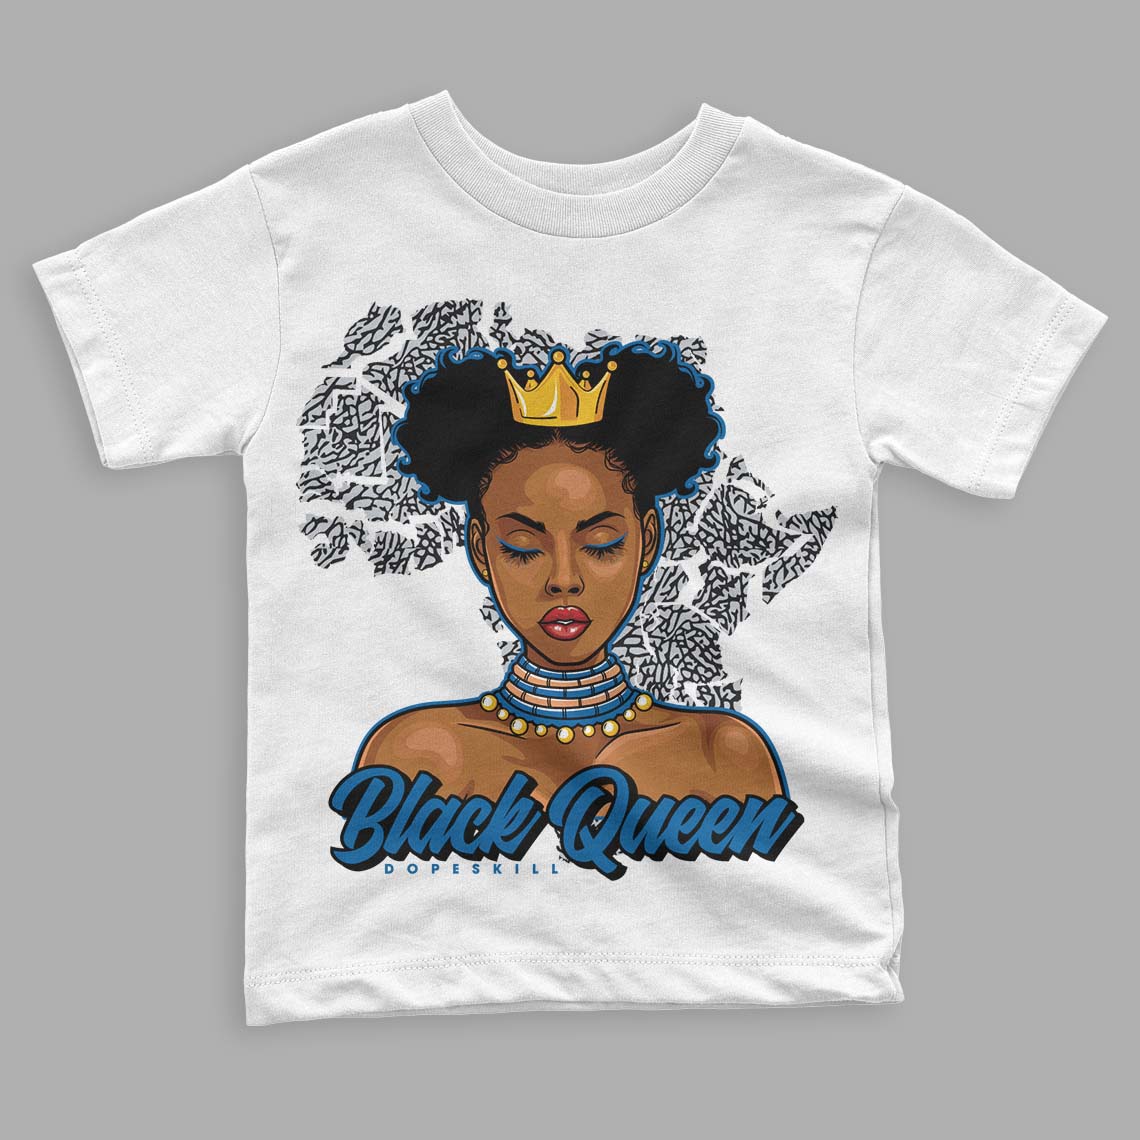 Jordan 3 Retro Wizards DopeSkill Toddler Kids T-shirt Black Queen Graphic Streetwear - White